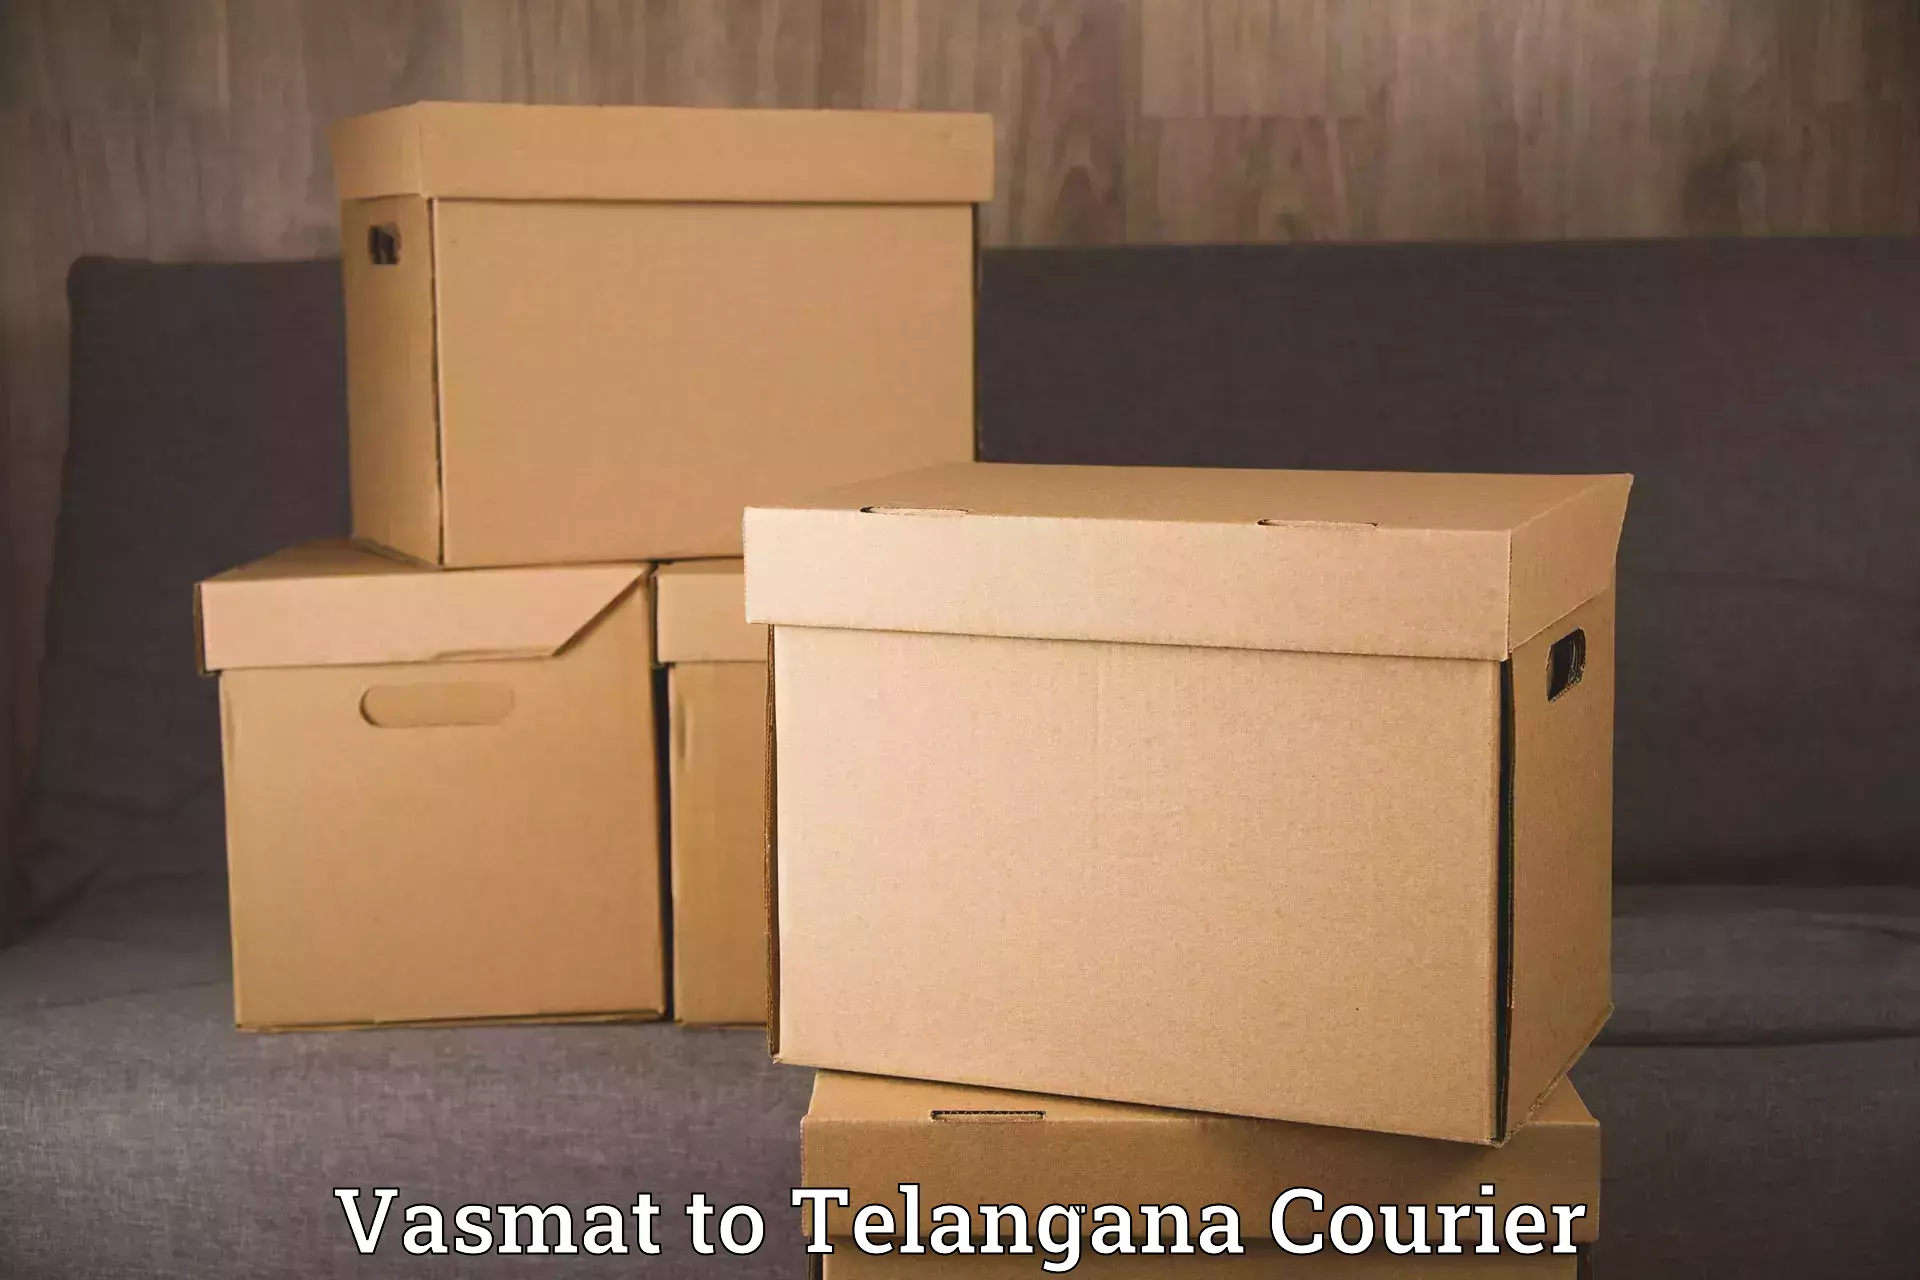 Efficient moving company Vasmat to Gangadhara